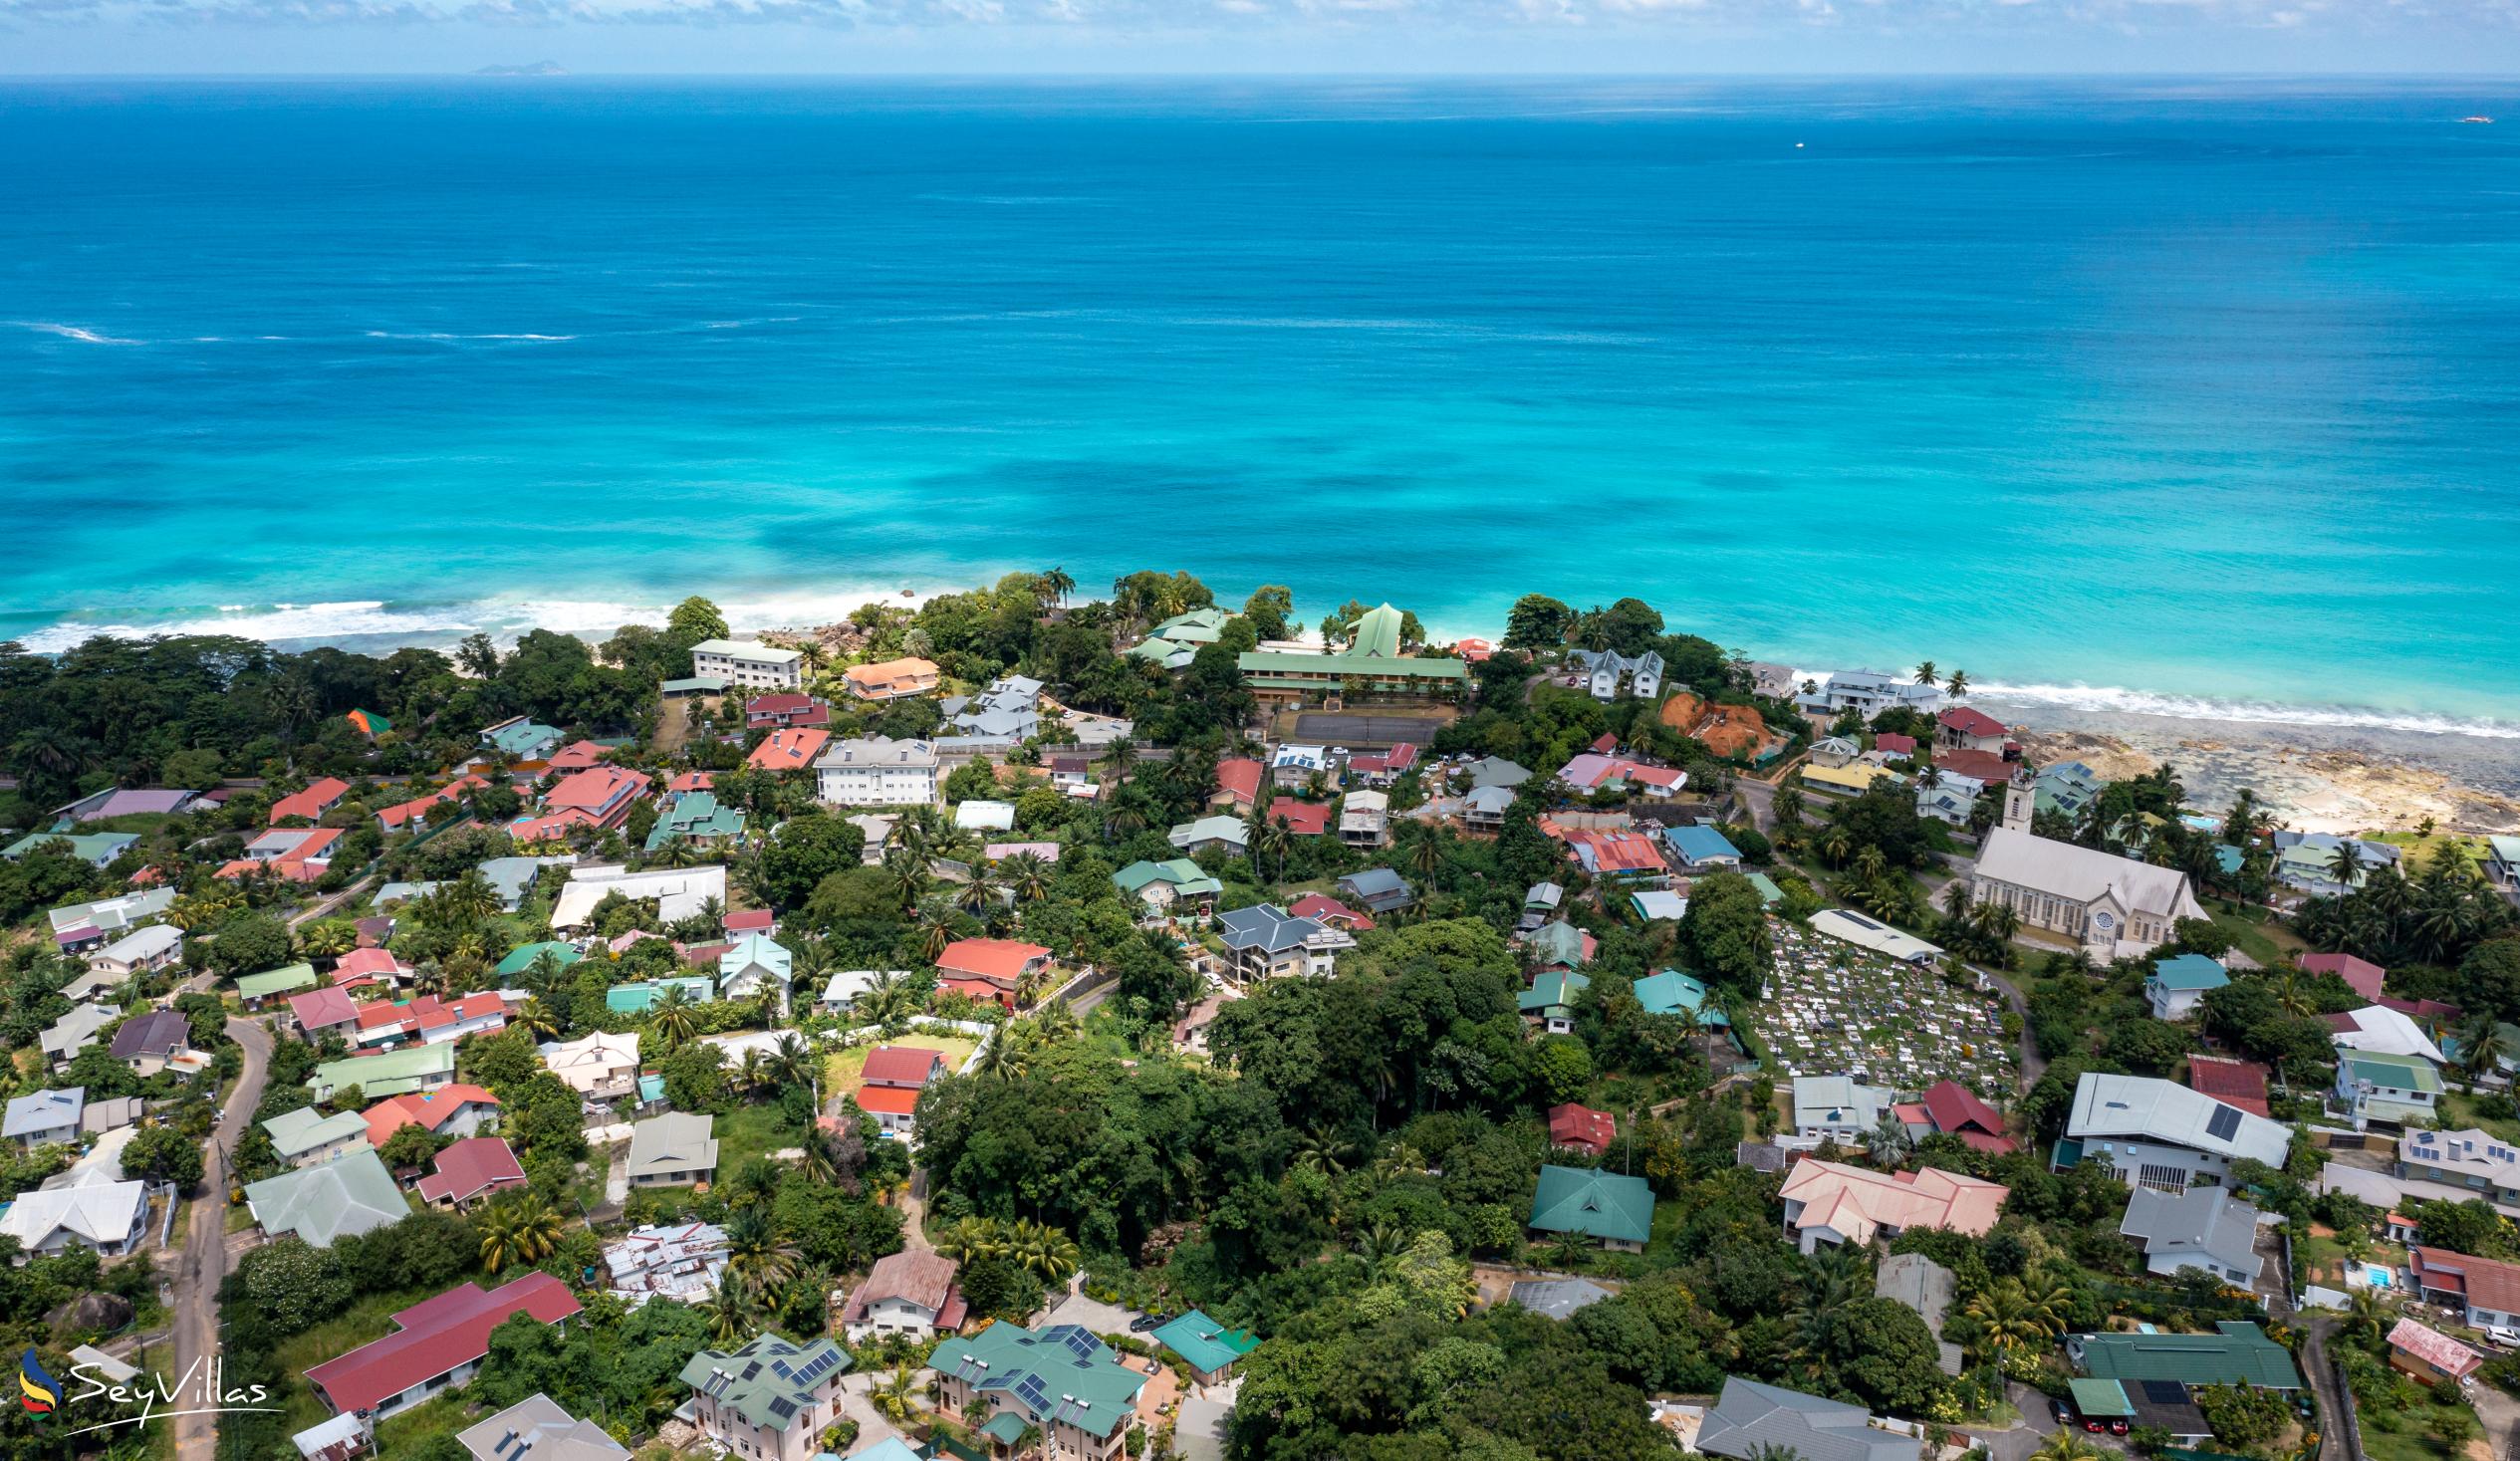 Foto 41: Villa Jasmin - Posizione - Mahé (Seychelles)